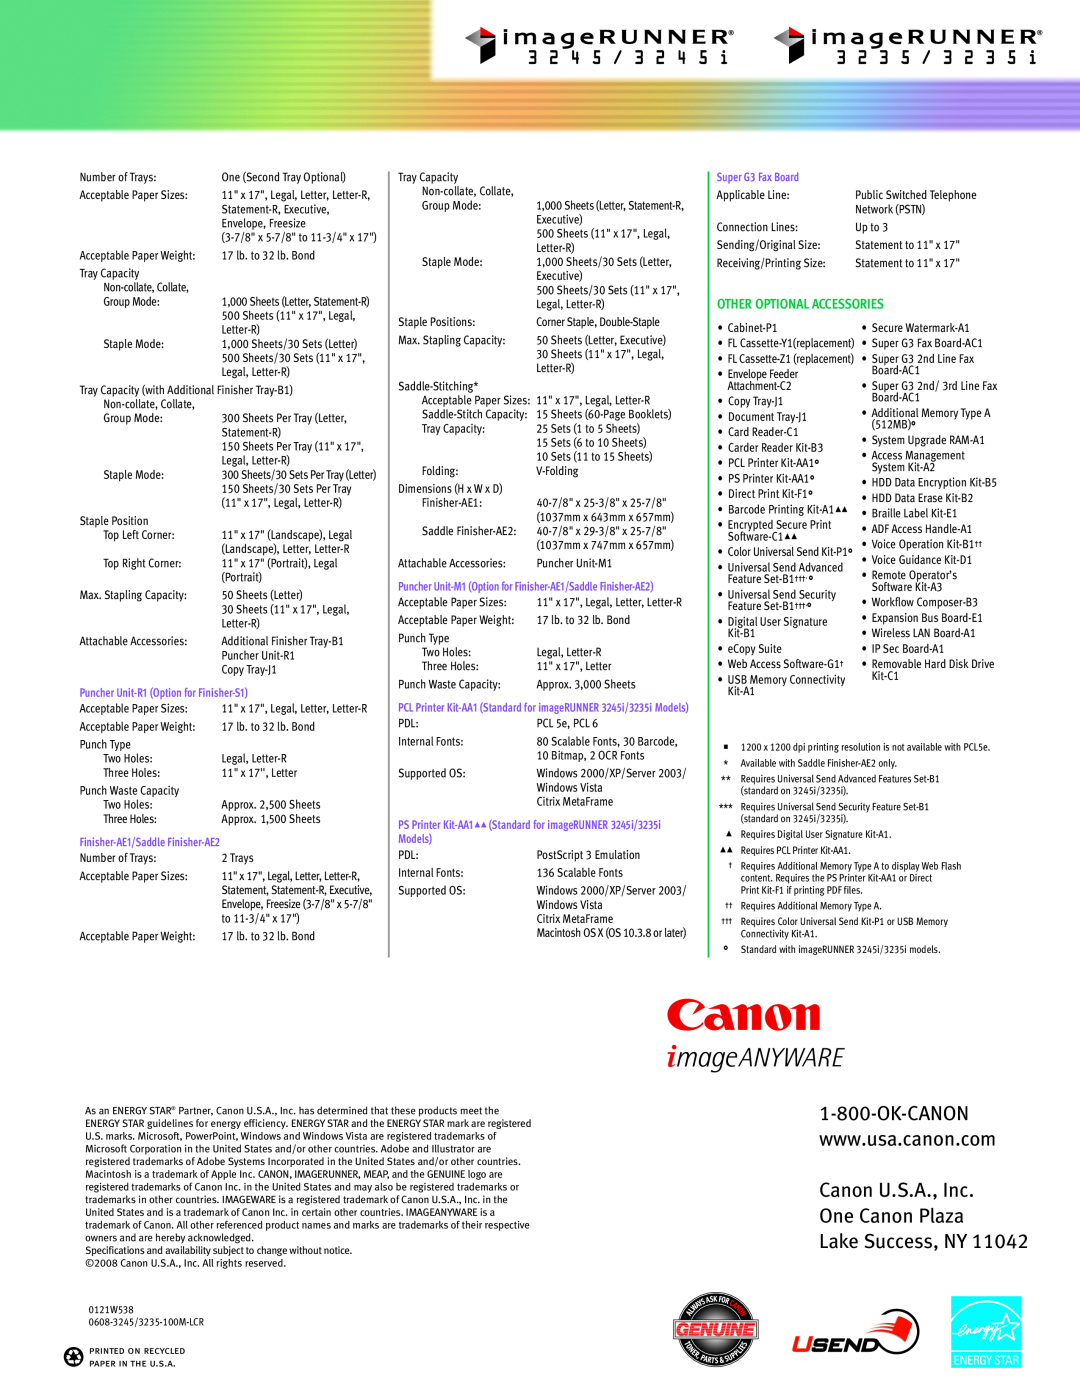 Canon 3245 manual Ok-Canon, Canon U.S.A., Inc One Canon Plaza Lake Success, NY, Other Optional Accessories 